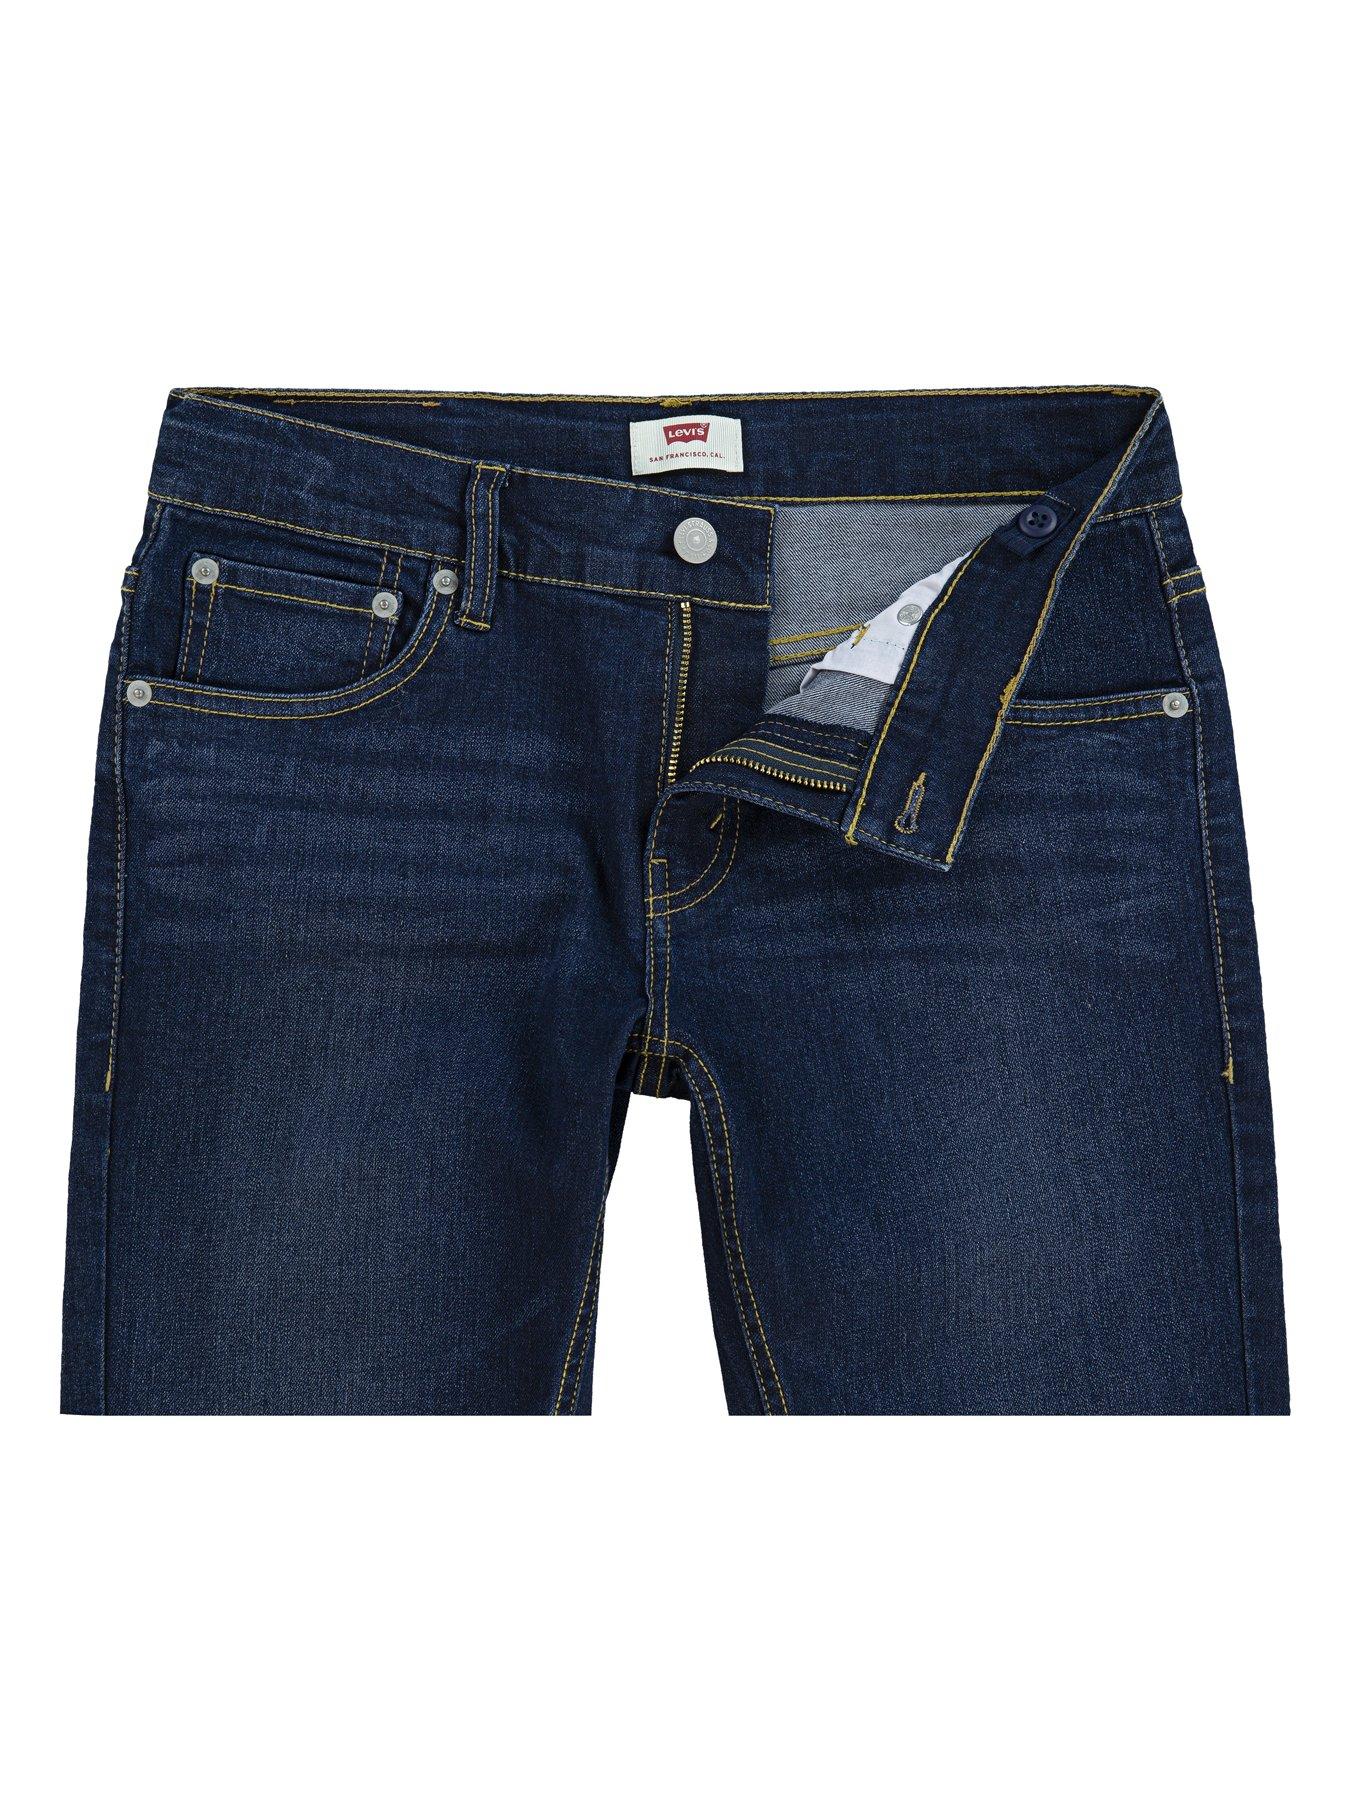 Levi's Boys 511 Slim Fit Jeans - Dark Wash 